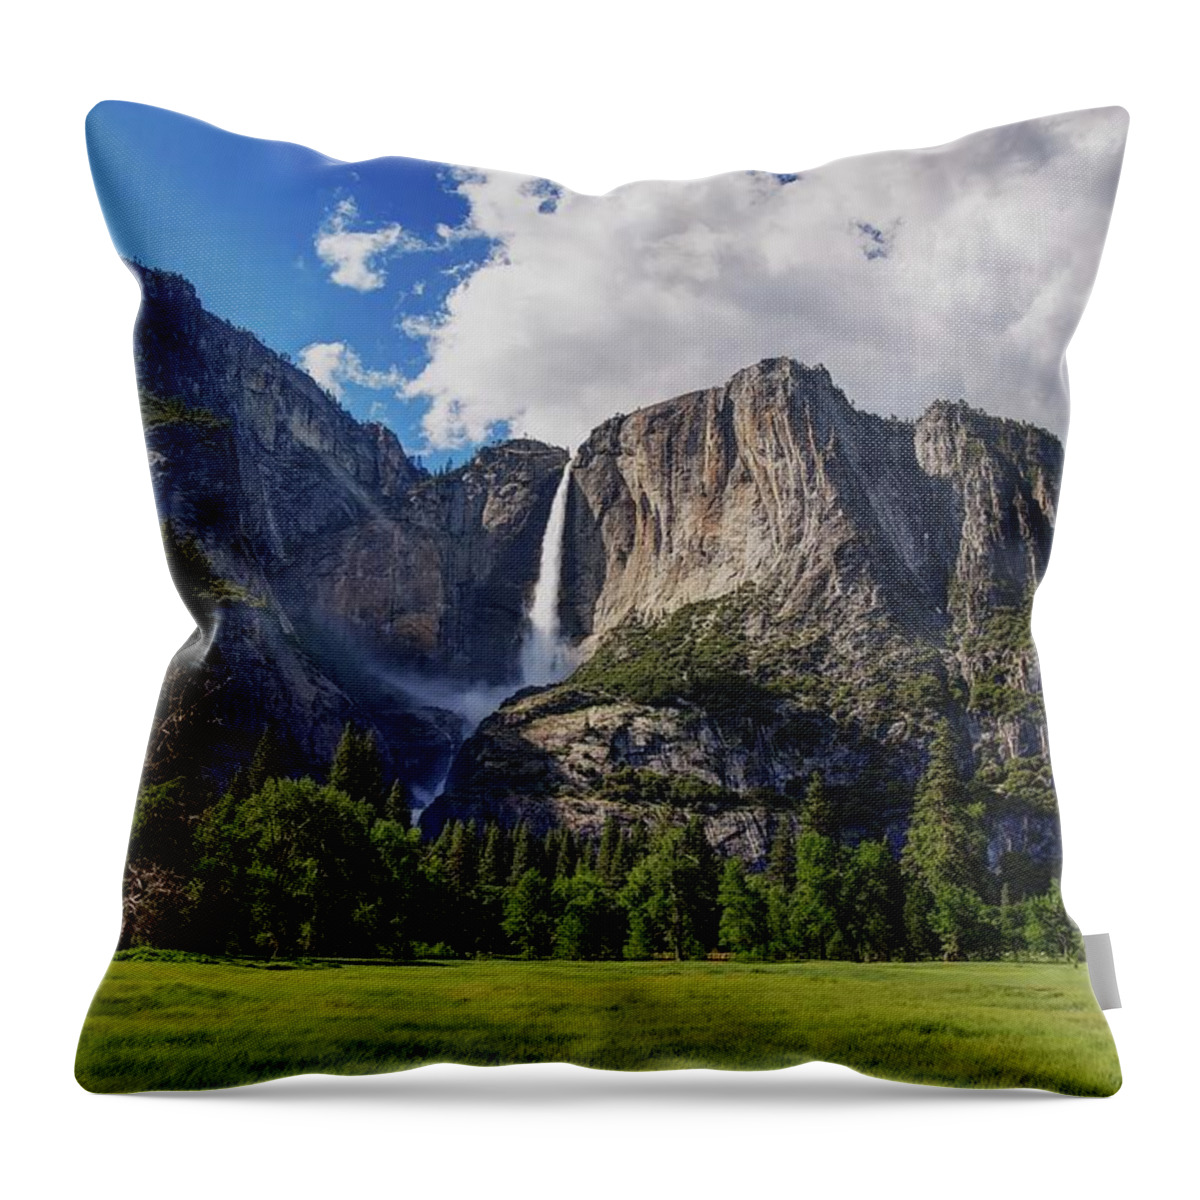 Scenics Throw Pillow featuring the photograph Yosemite Falls by Thomas Kurmeier